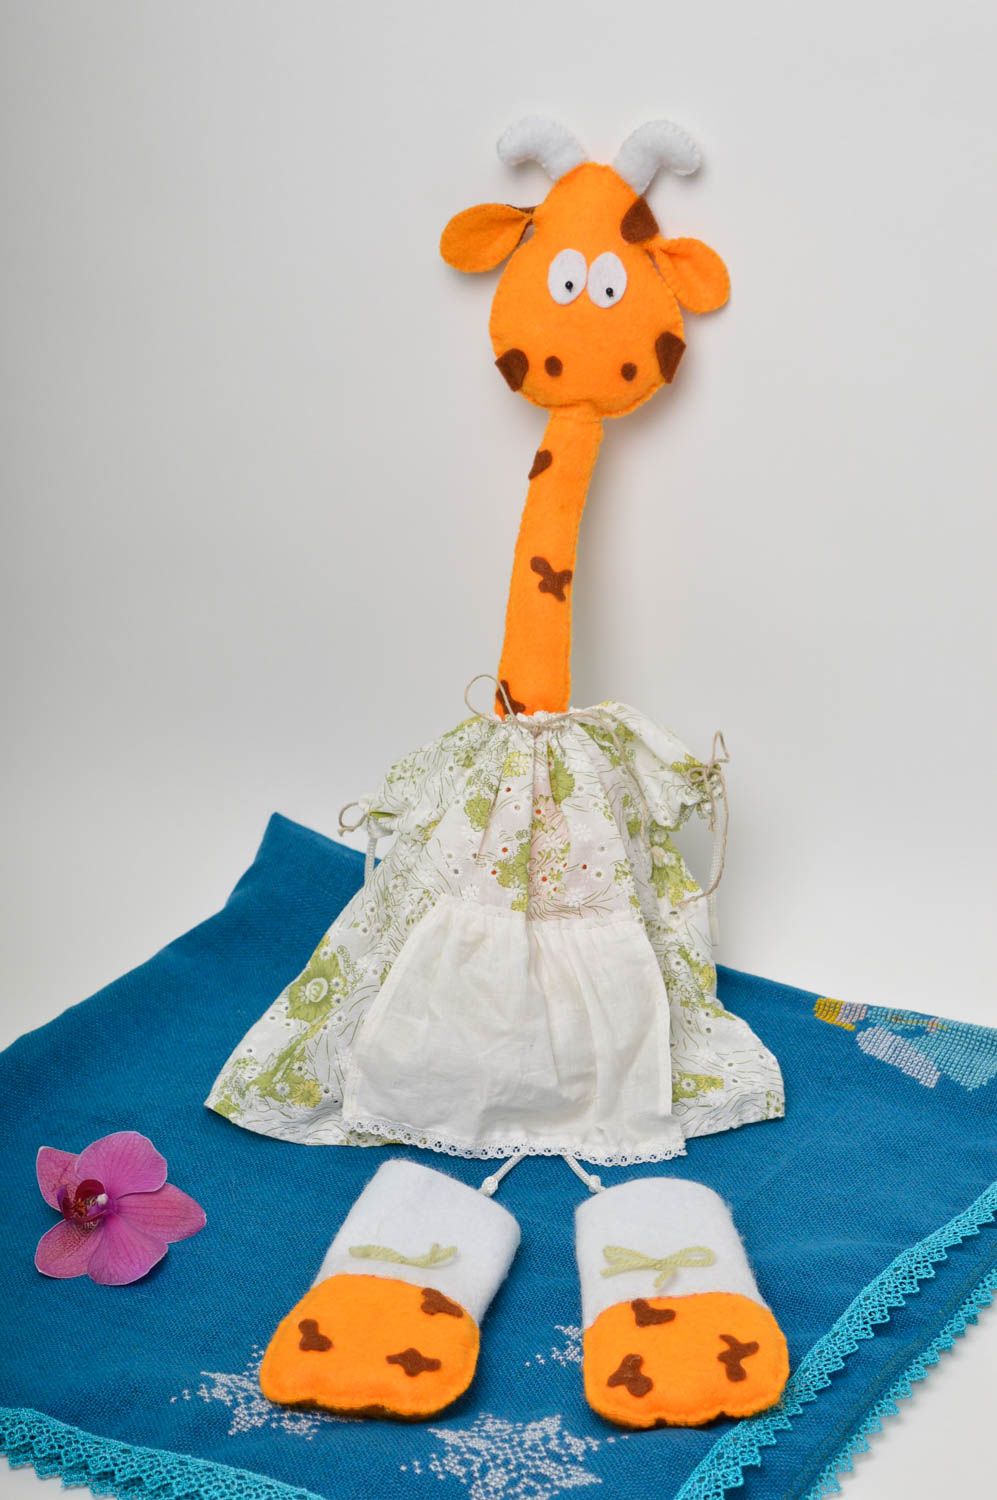 Handmade soft toy stuffed animals giraffe toy for kids nursery decor kids gifts photo 1